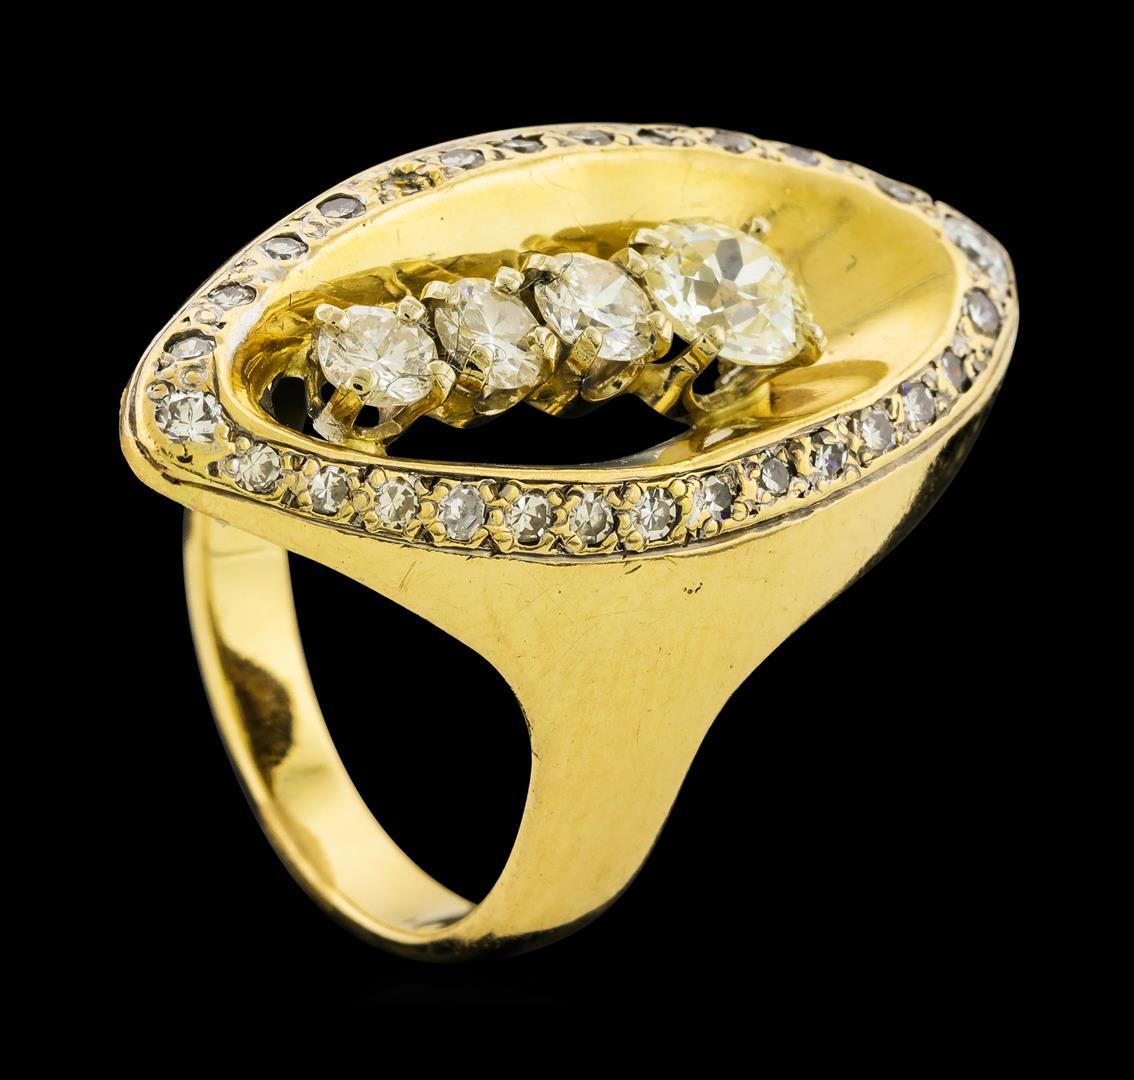 1.73 ctw Diamond Ring - 14KT Yellow Gold